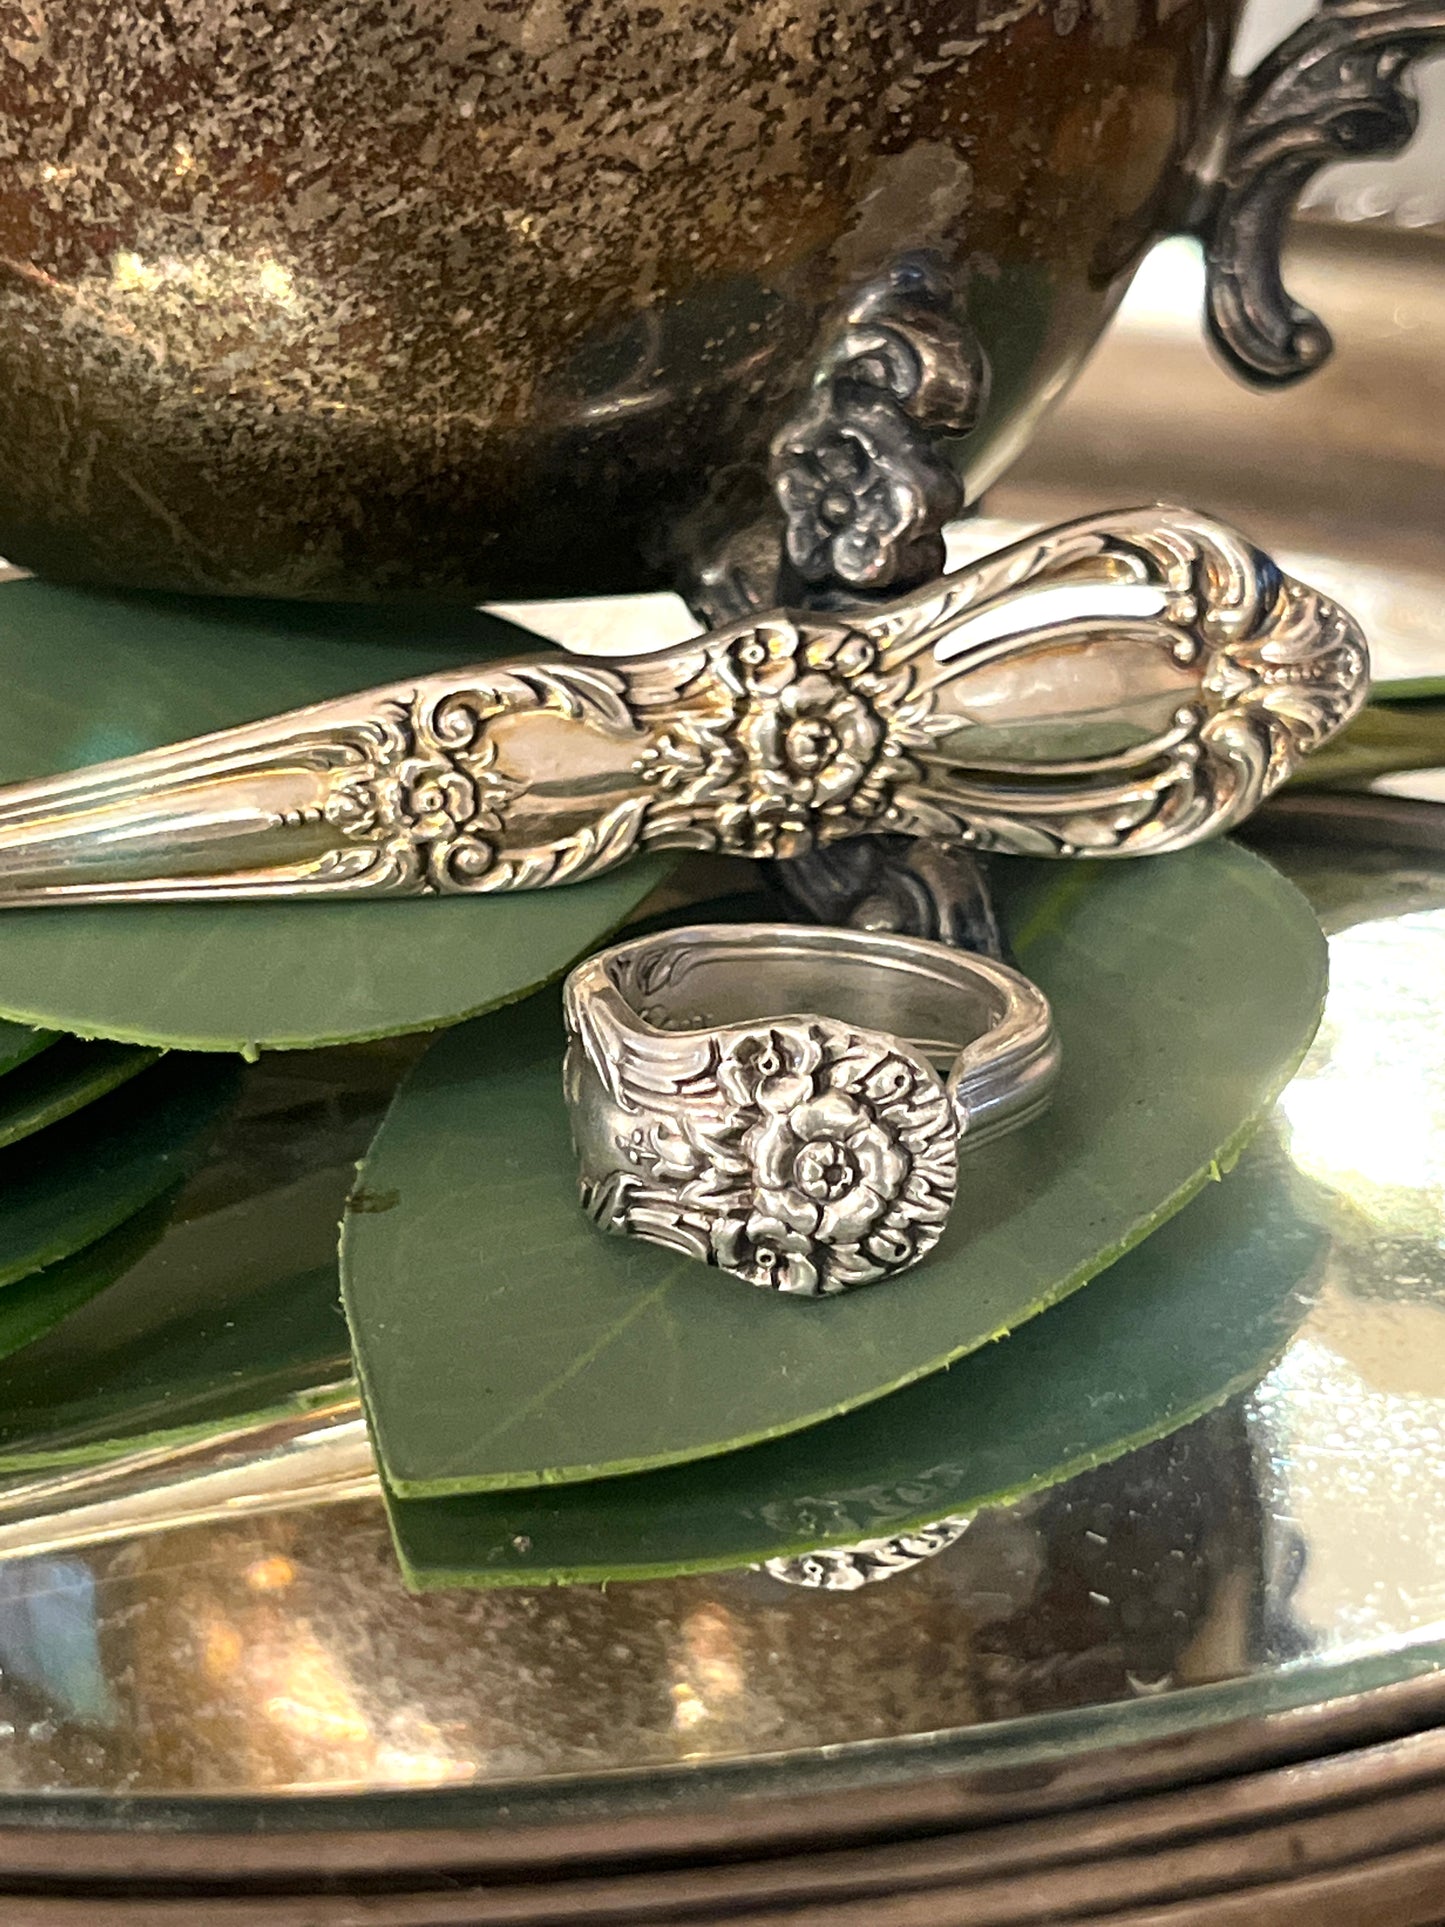 Grand Heritage “Floral” Teaspoon Spoon Ring- Vintage 1968